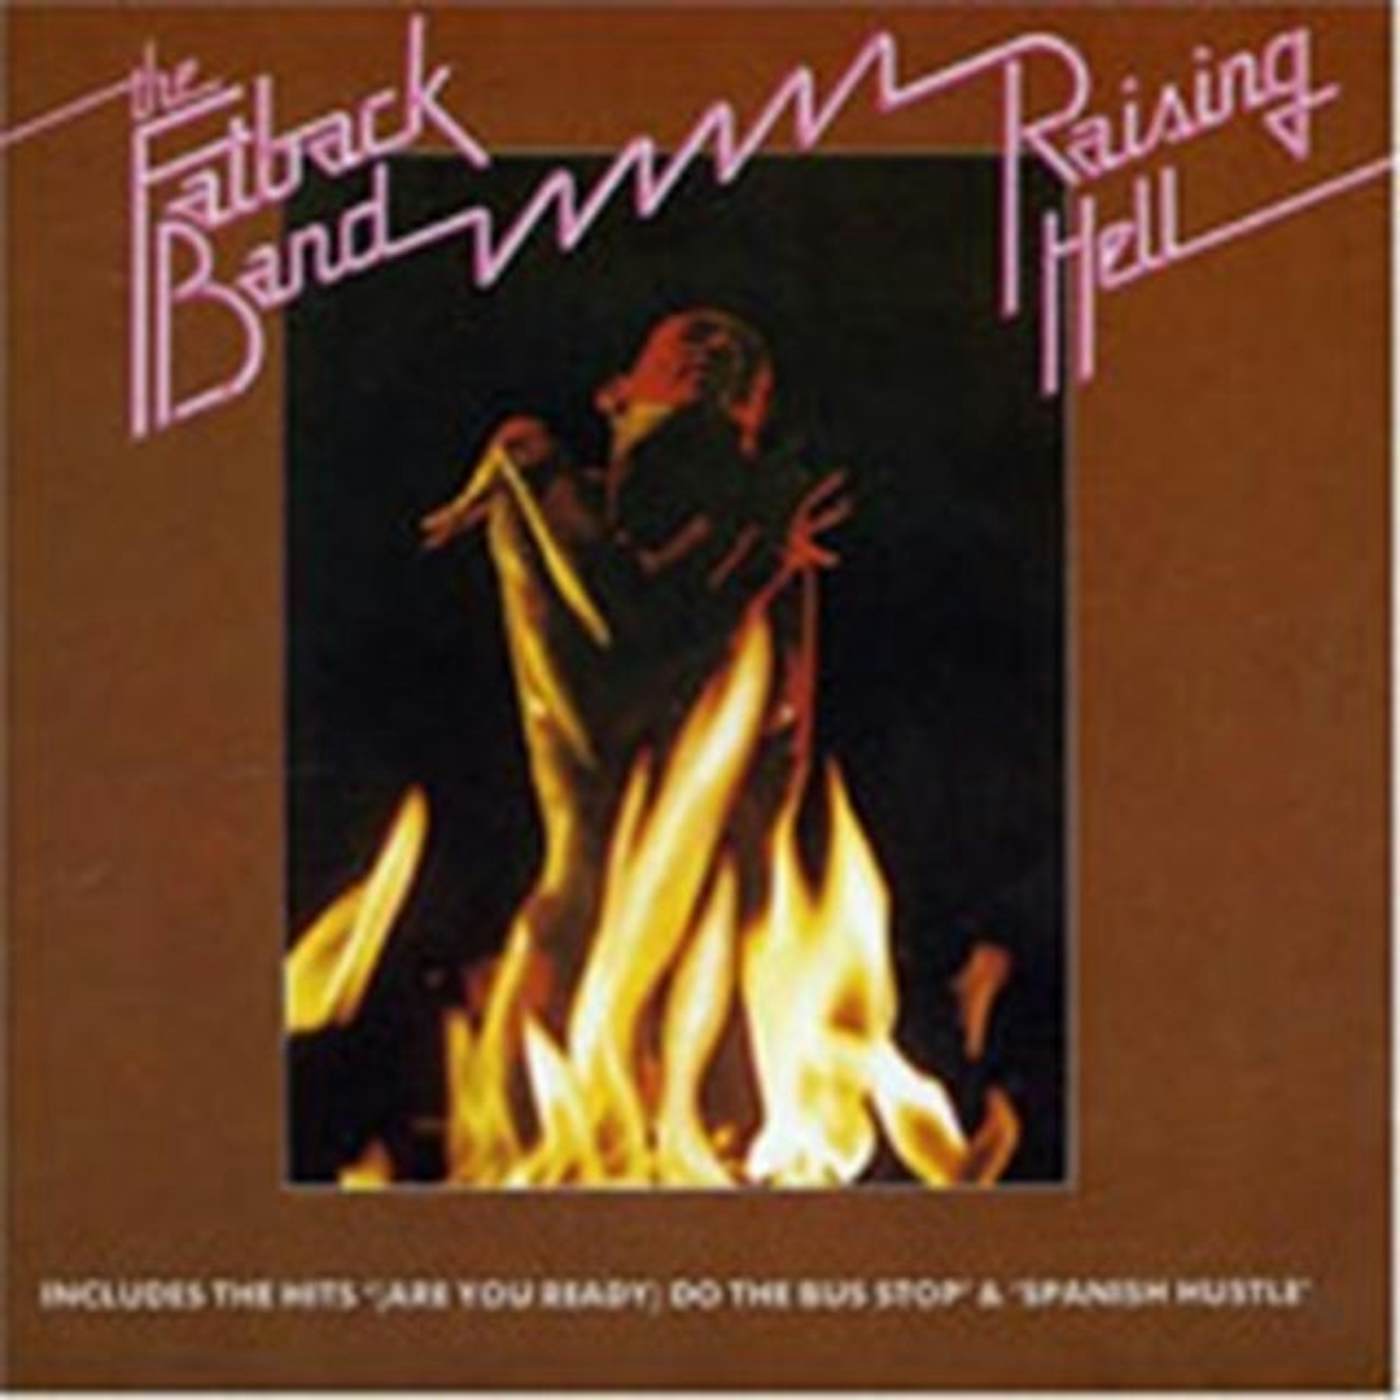 Fatback Band CD - Raising Hell